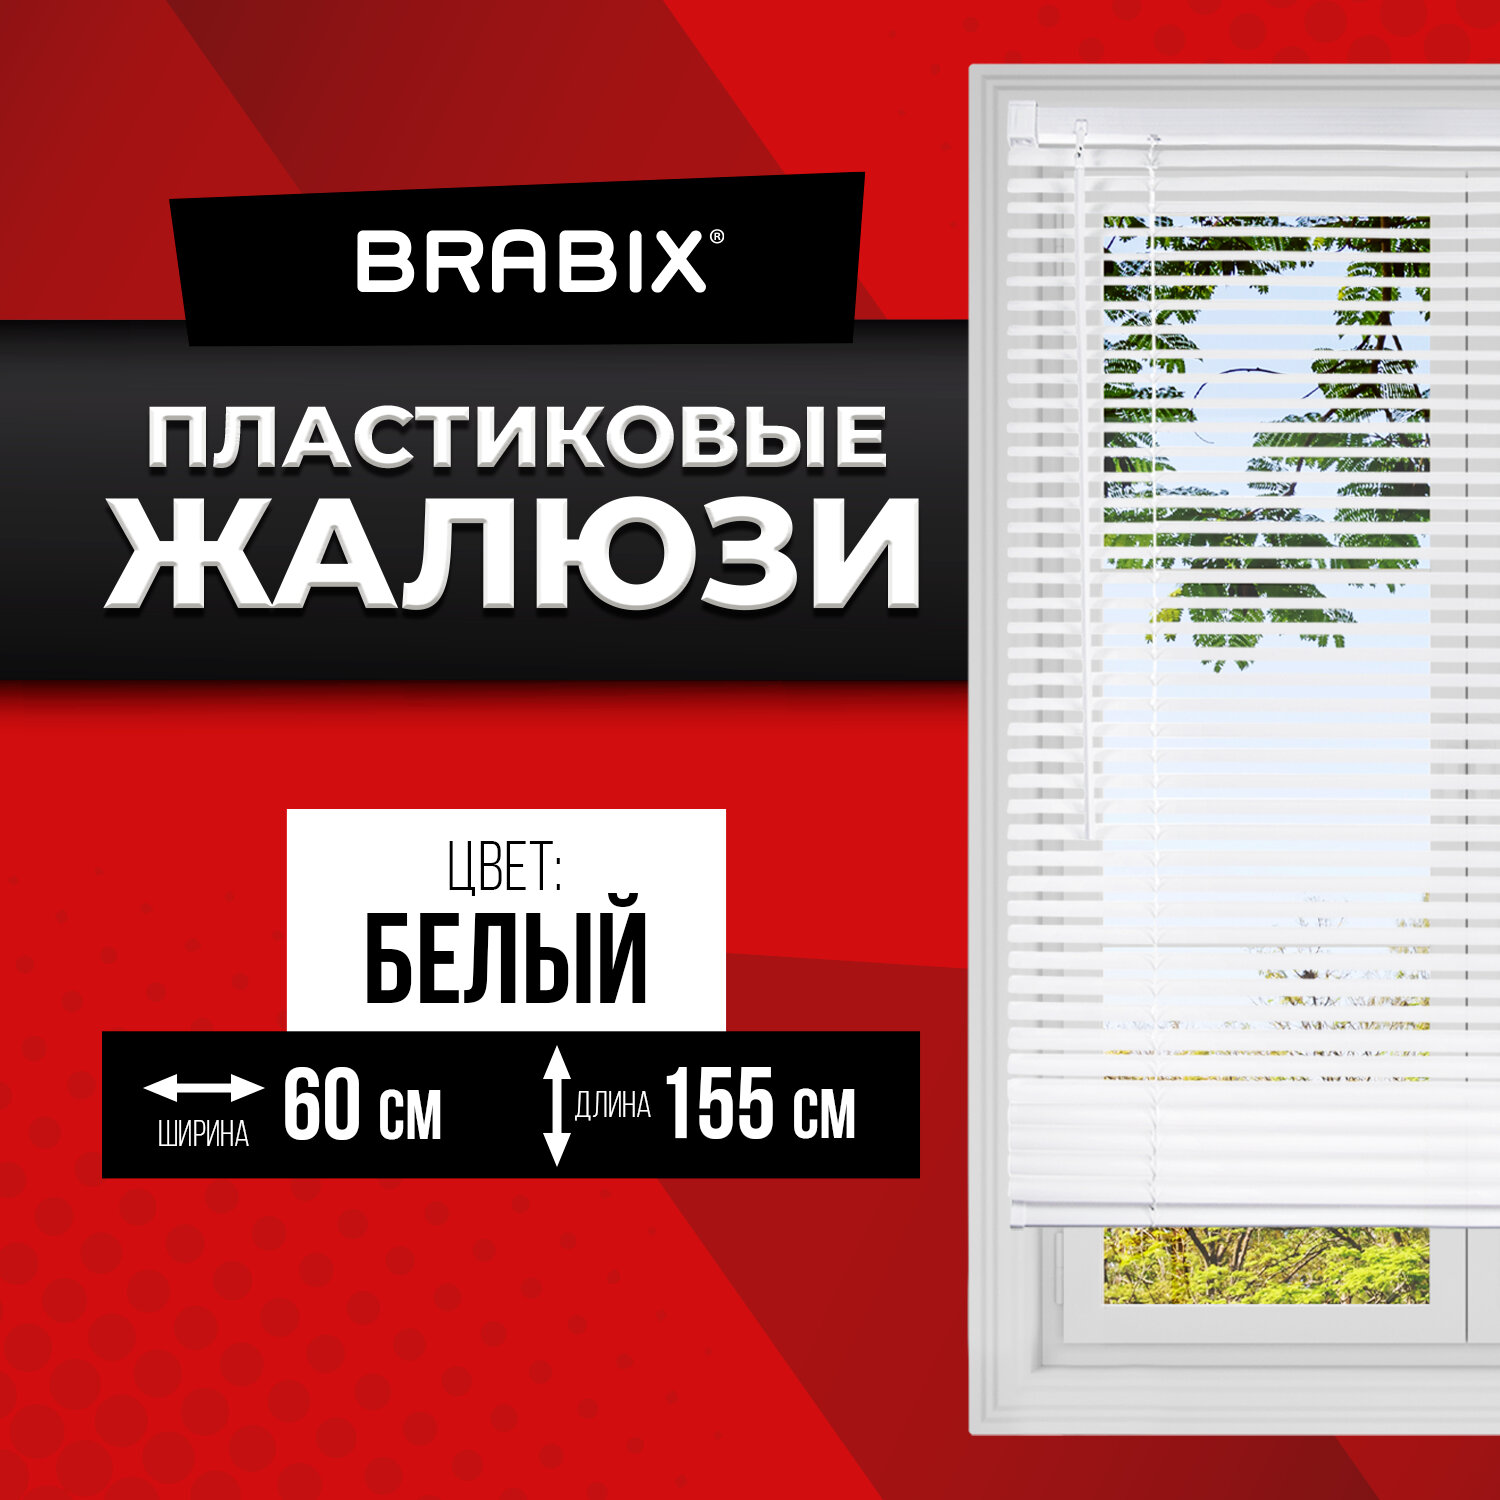 Brabix Жалюзи BRABIX 606025, комплект 2 шт.